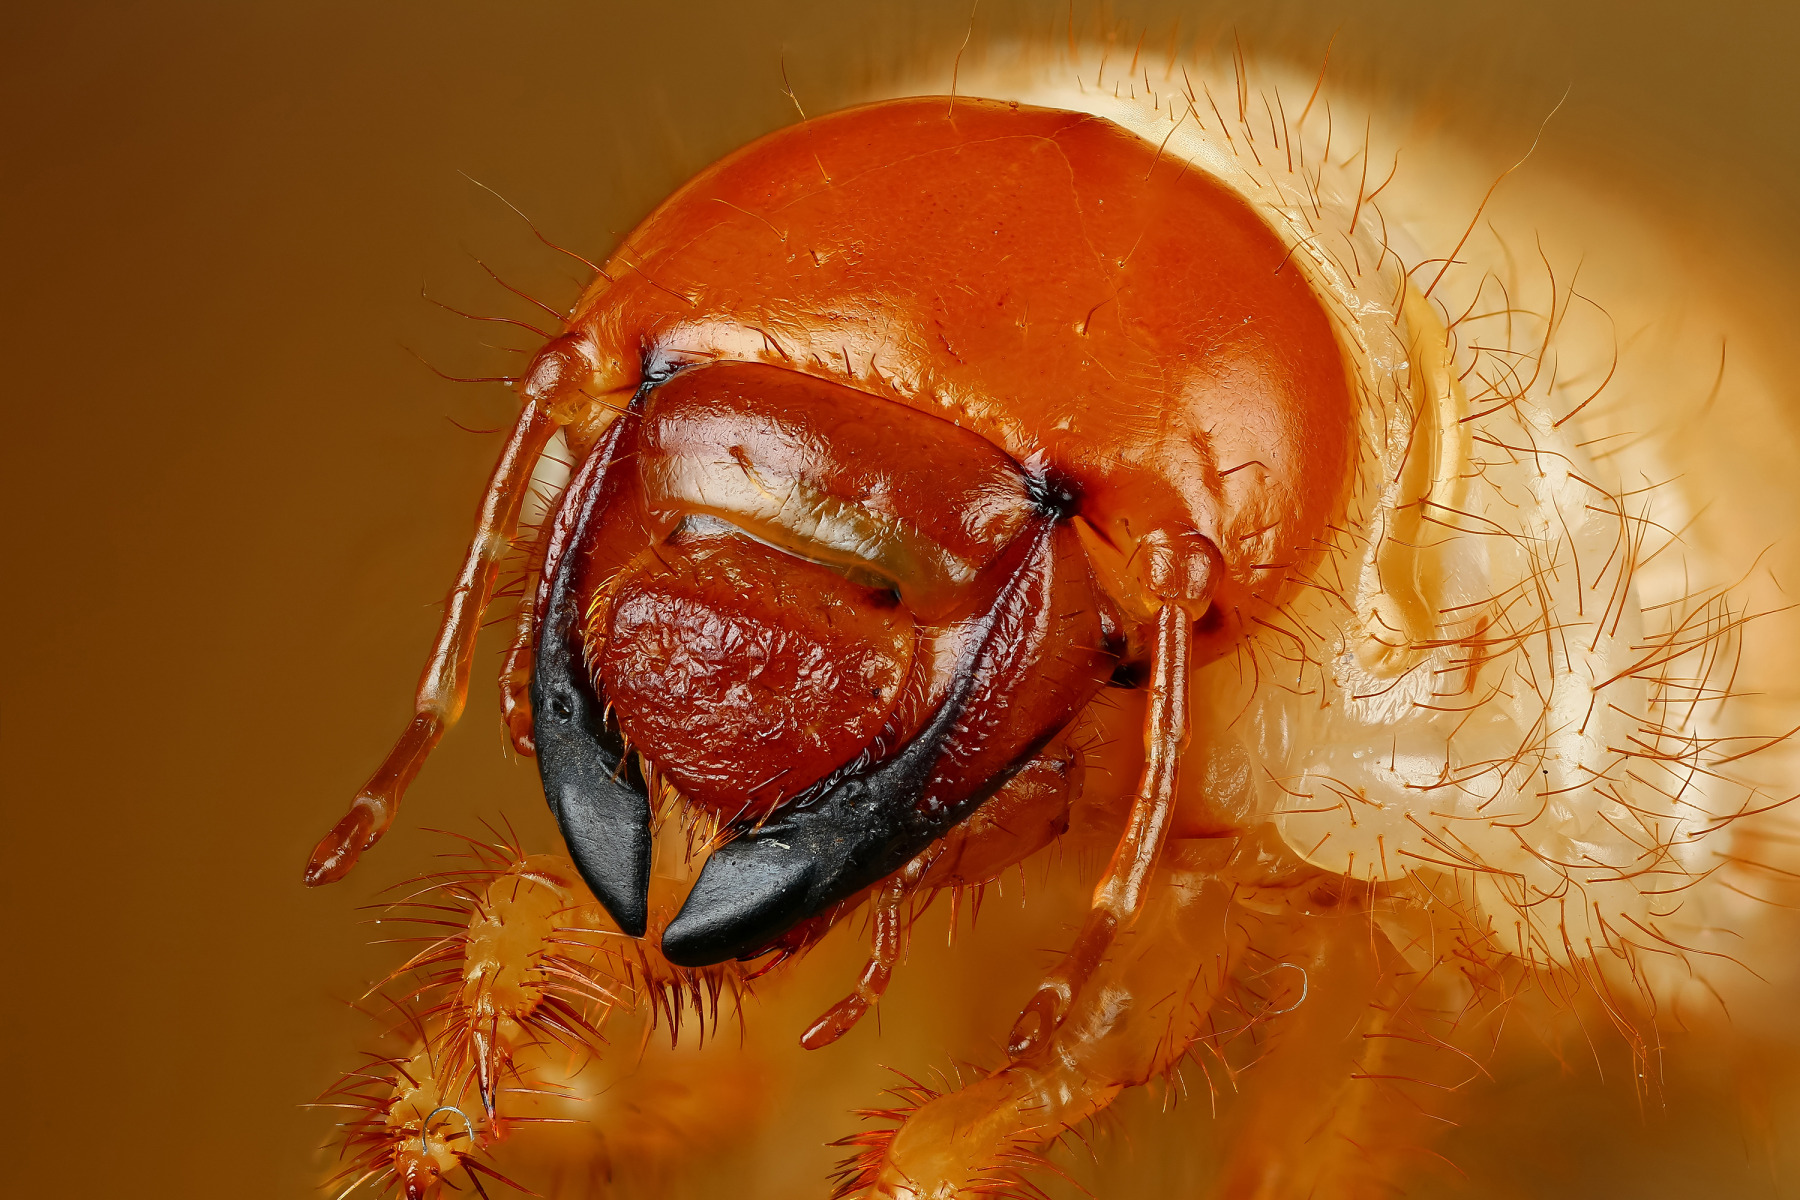 Майский жук | Фотограф Андрей Шаповалов | foto.by фото.бай